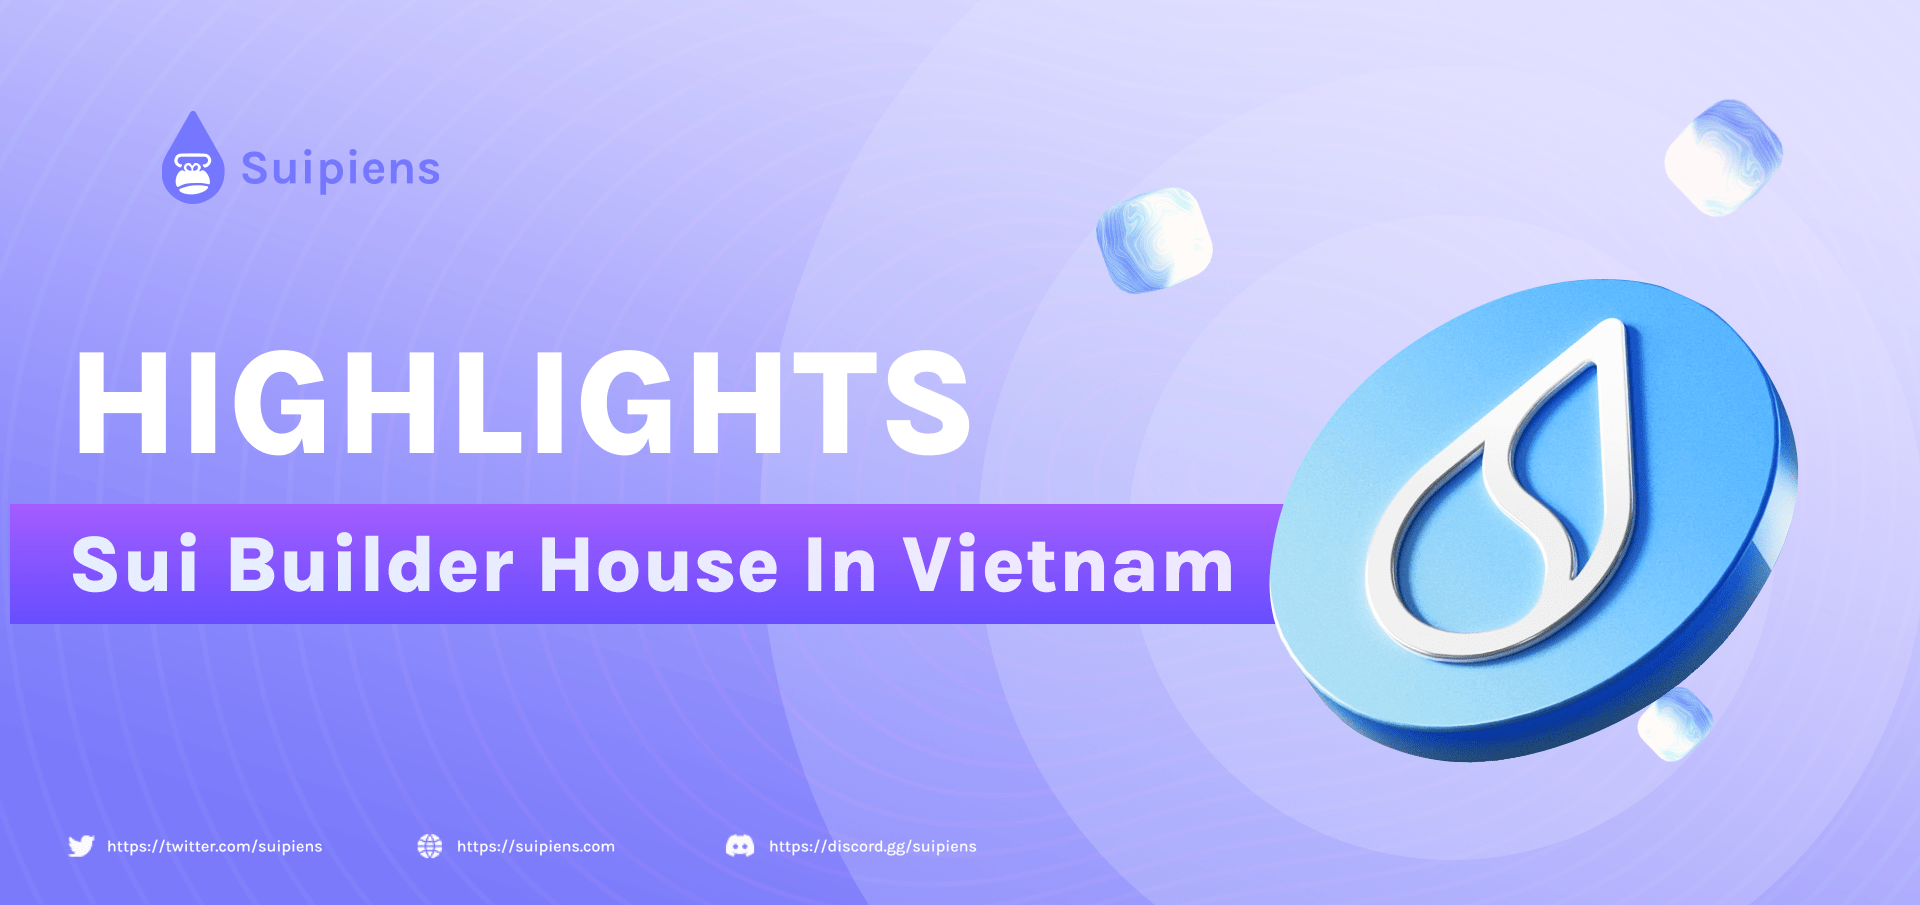 Vietnam Sui Builder House Highlights